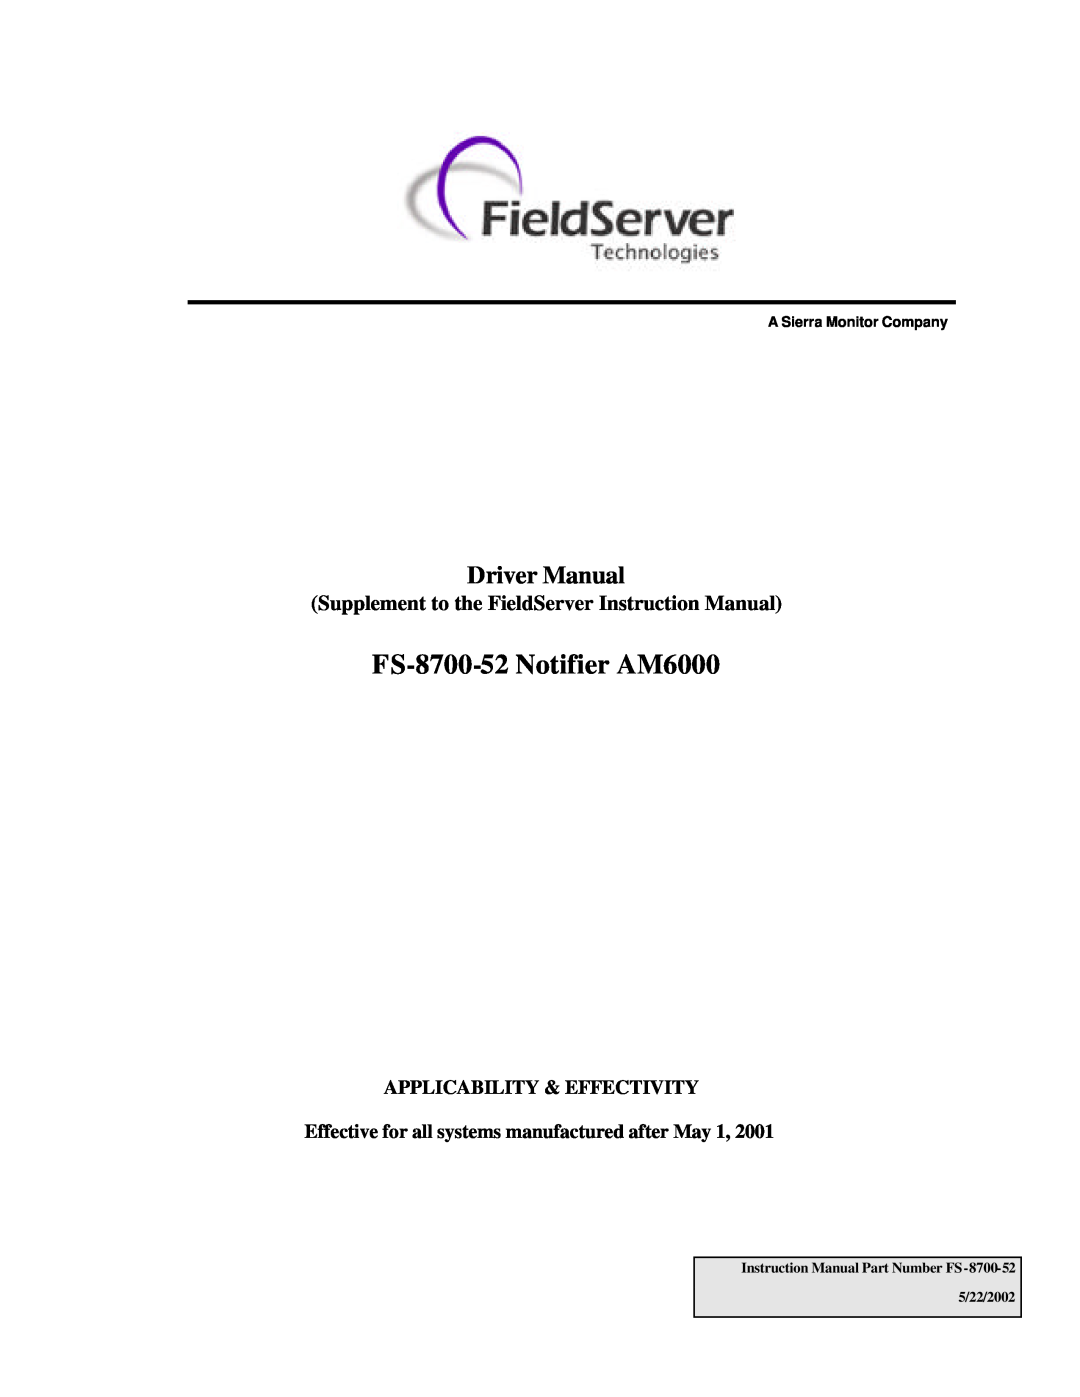 FieldServer FS-8700-52 instruction manual Supplement to the FieldServer Instruction Manual, Applicability & Effectivity 